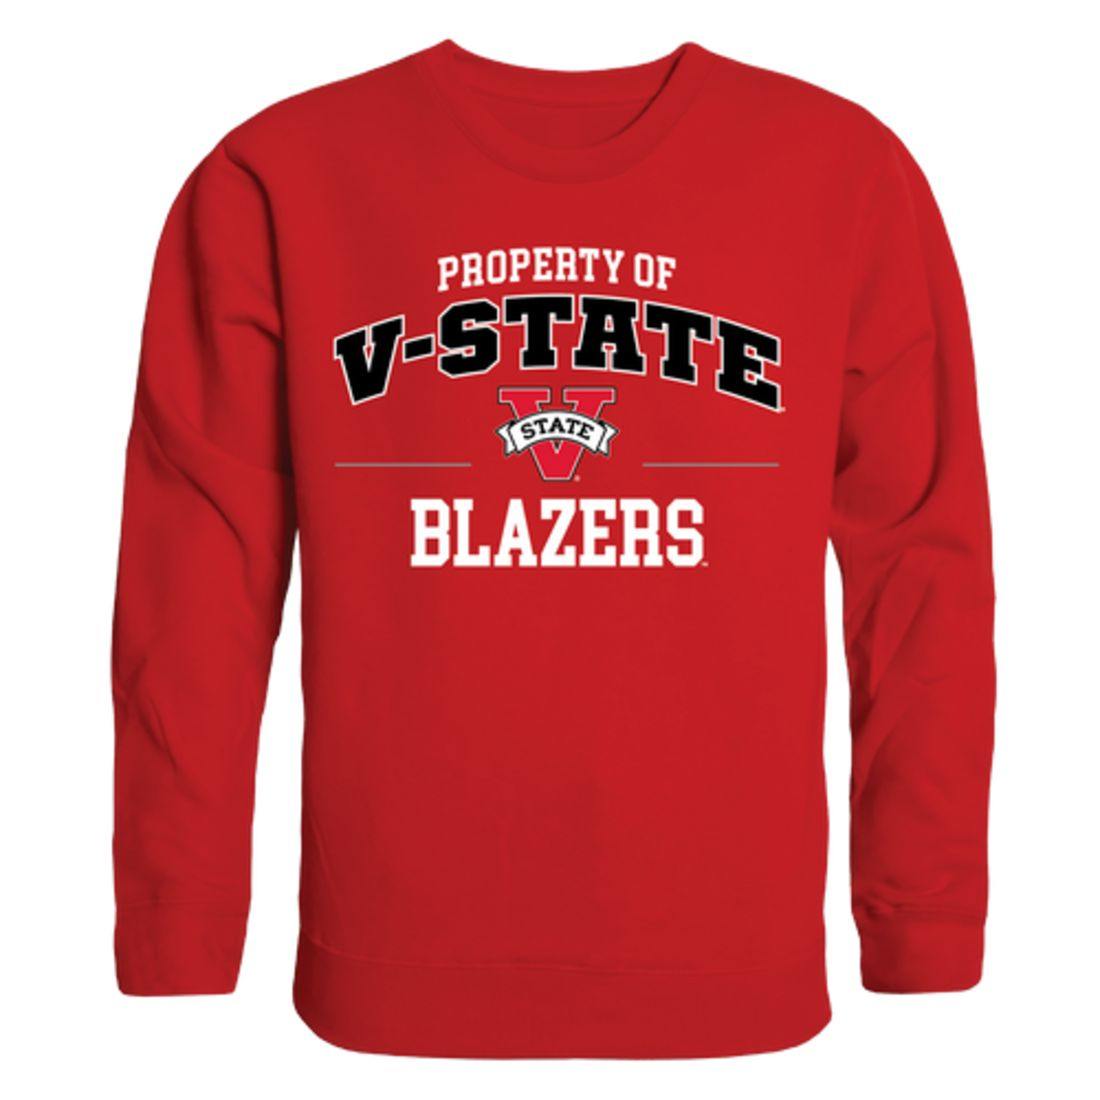 Valdosta V-State University Blazers Property Crewneck Pullover Sweatshirt Sweater Red-Campus-Wardrobe